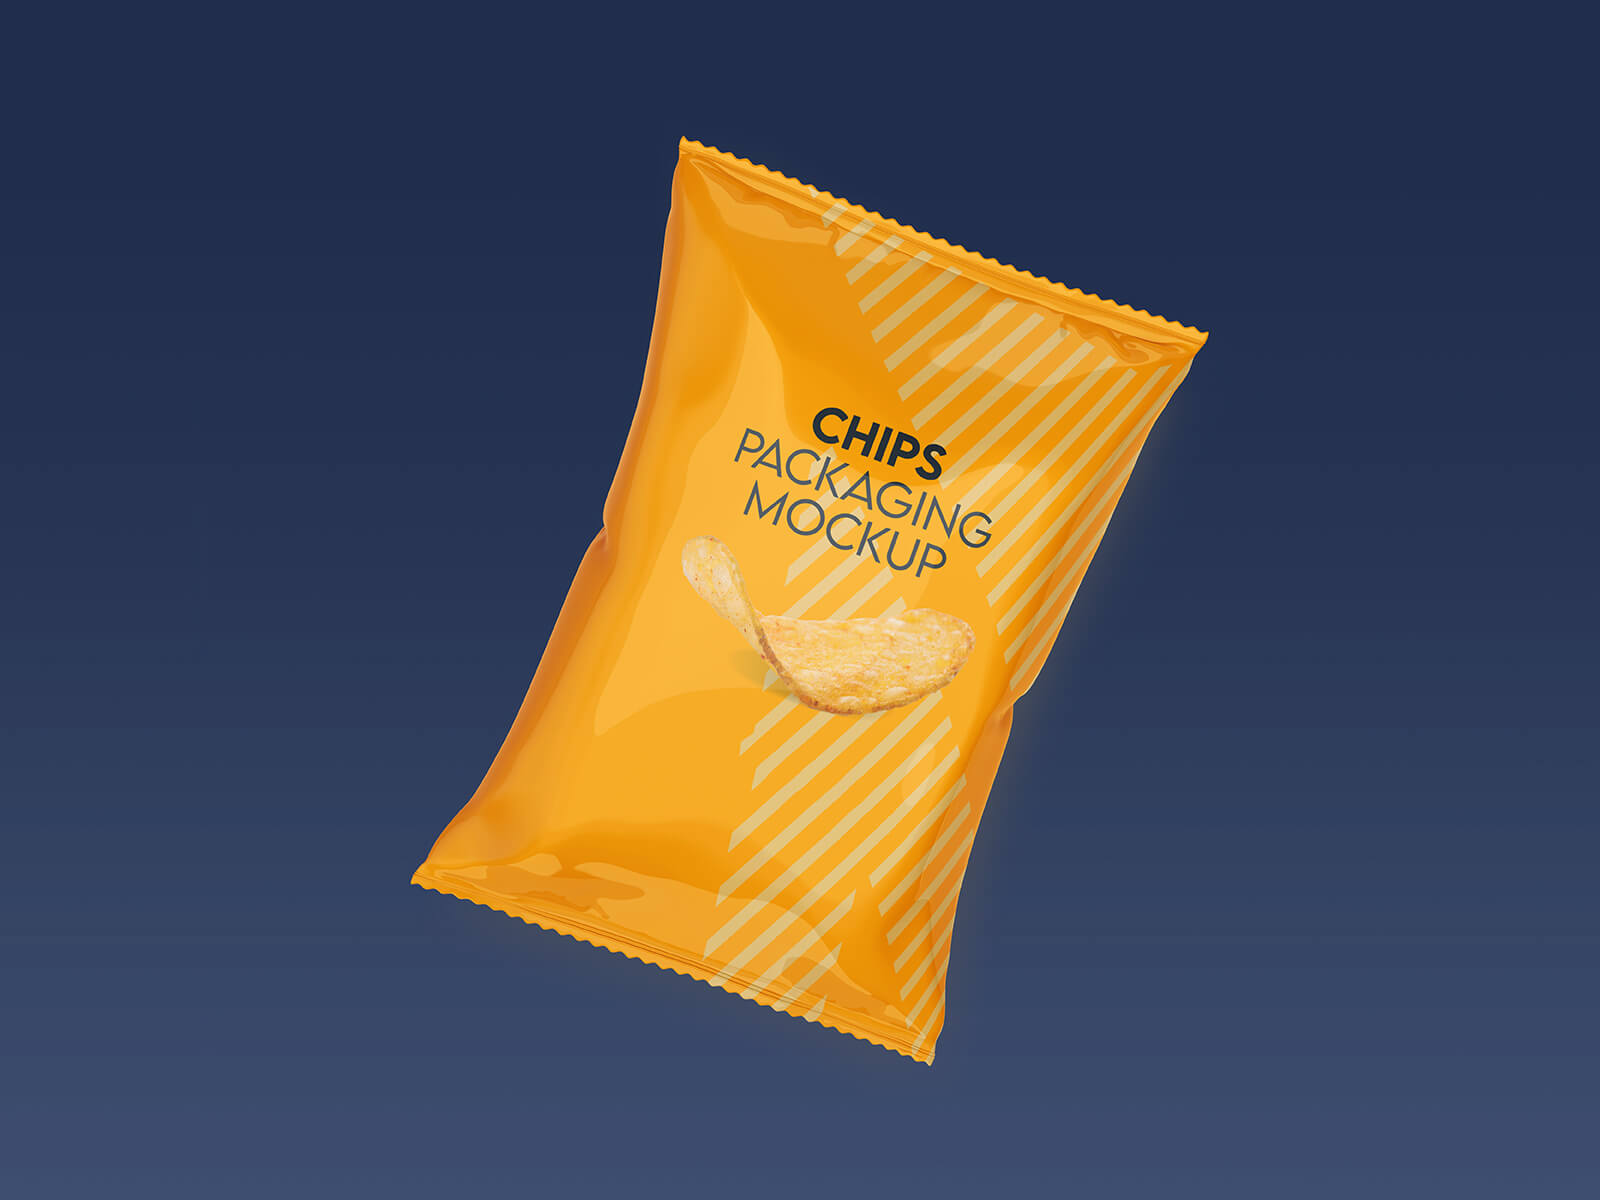 Free Chips Packaging Snack Bag Mockup PSD